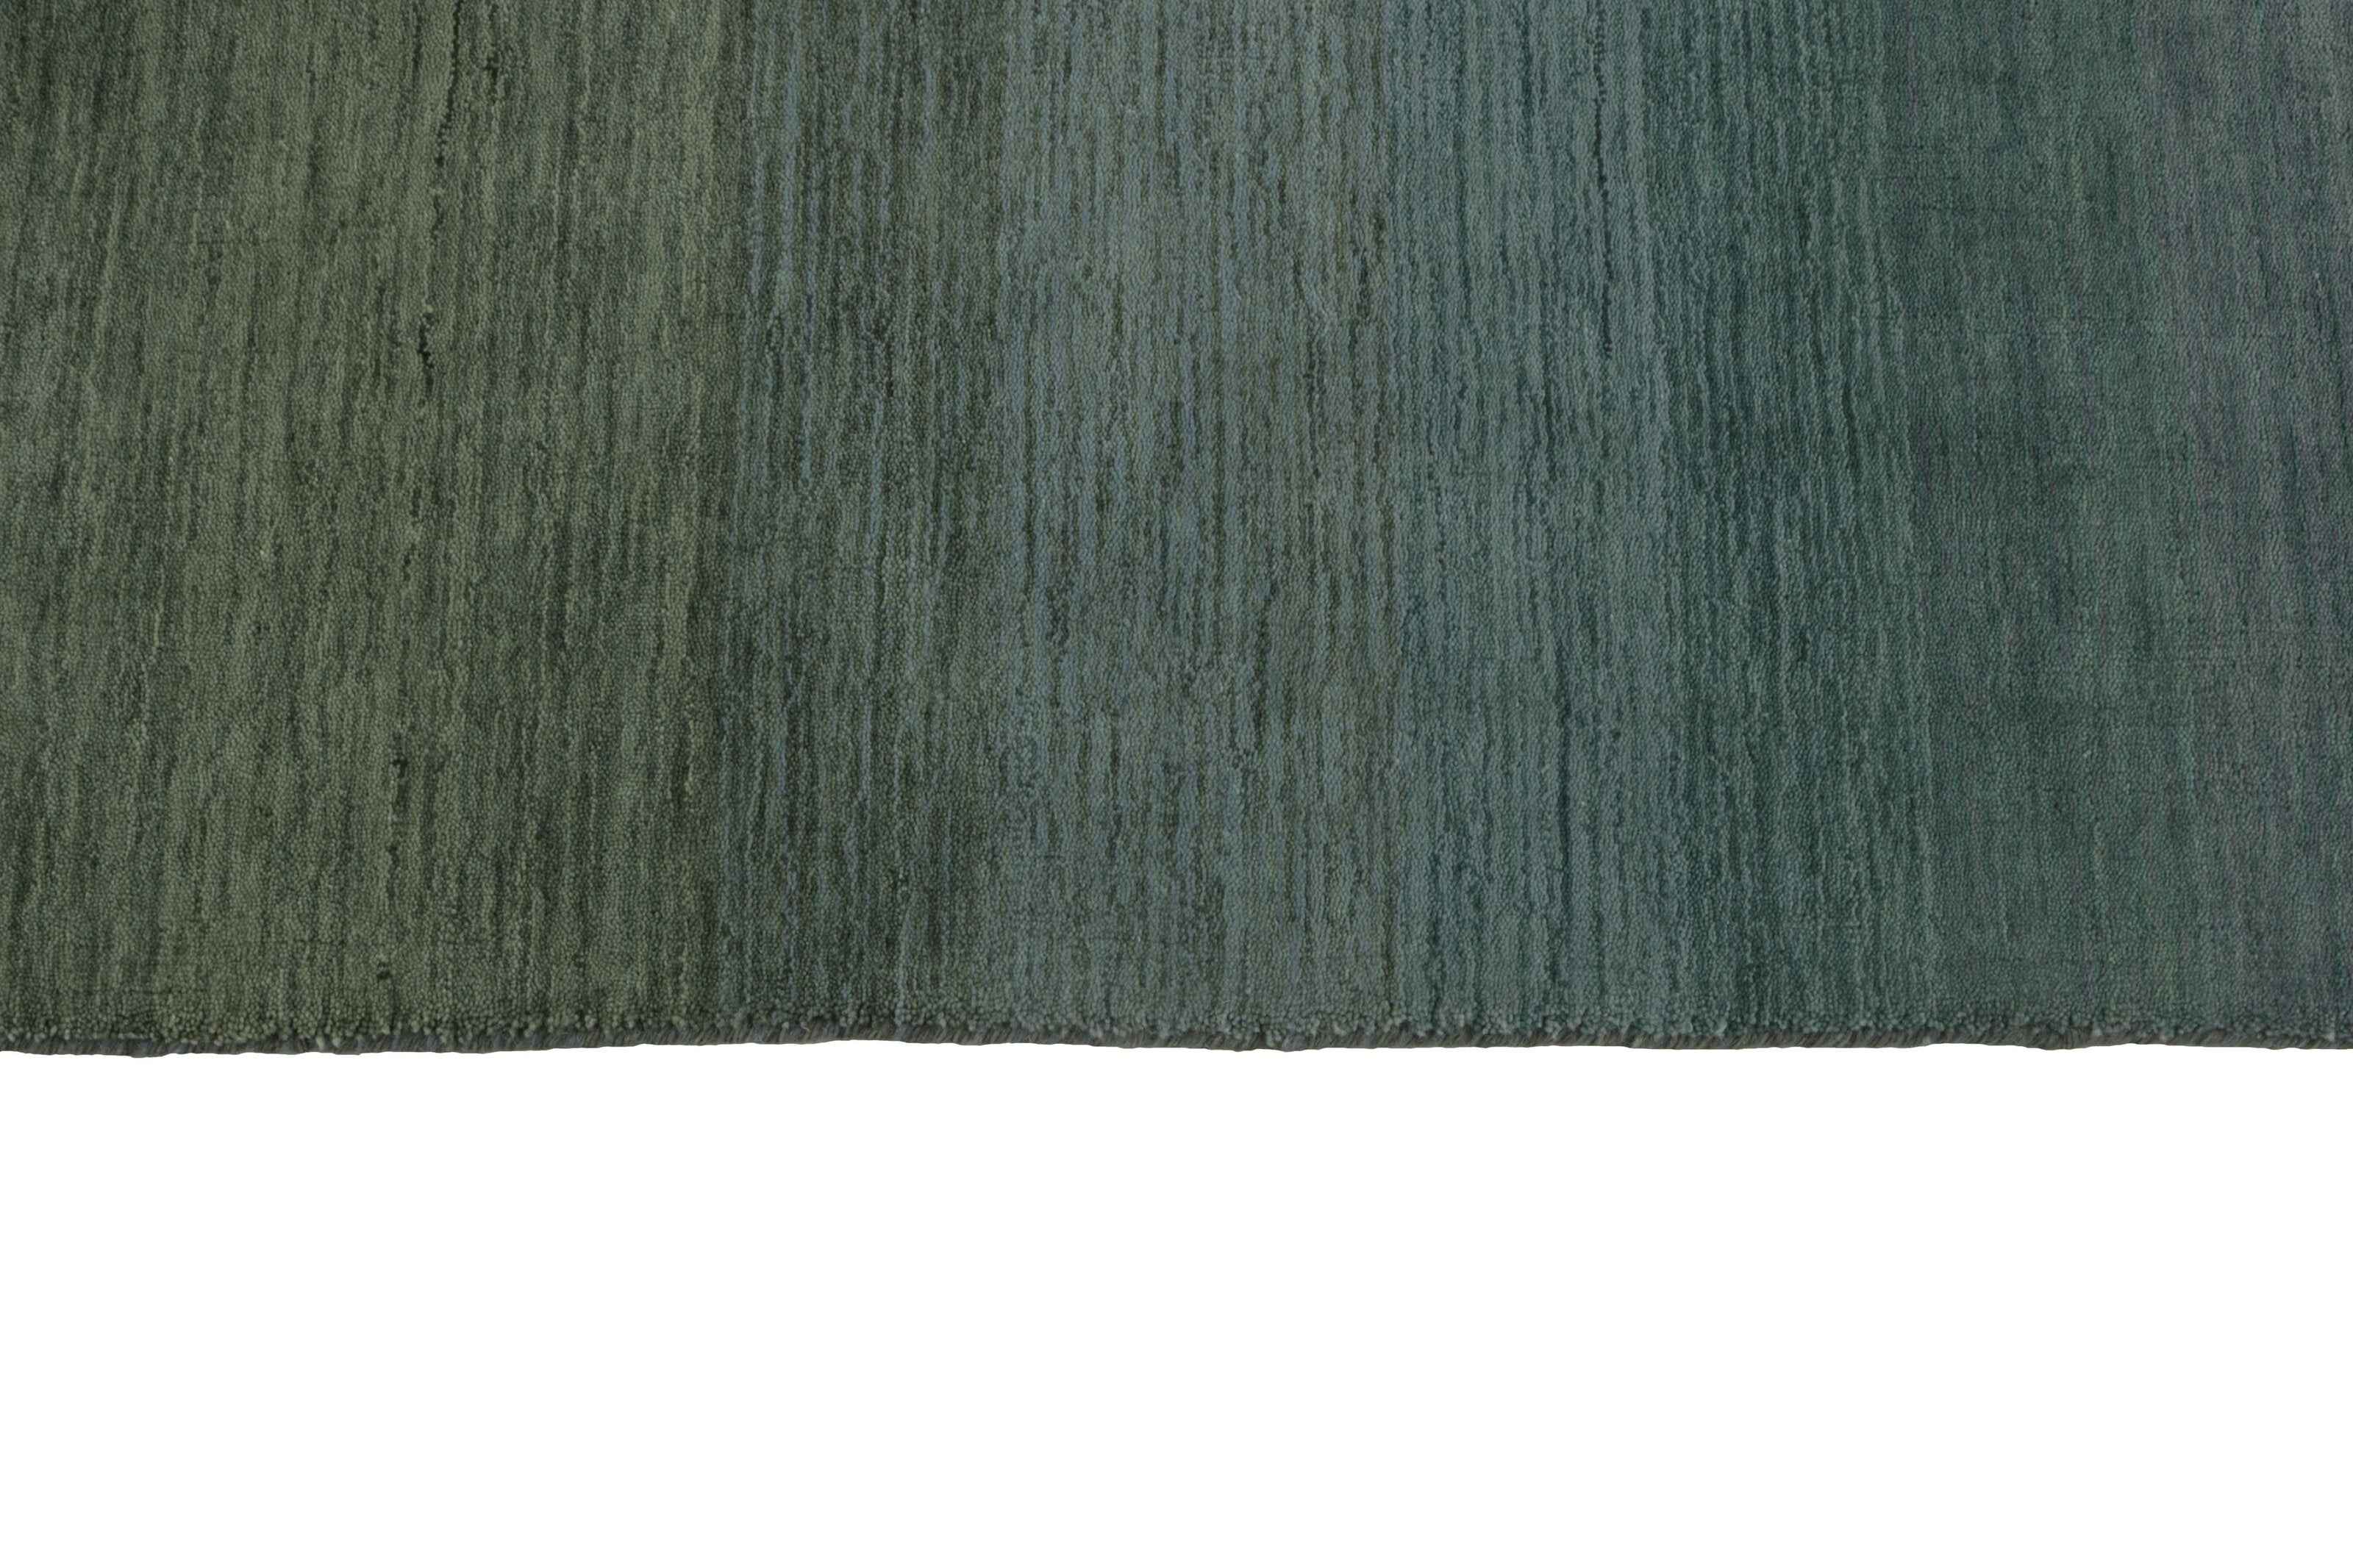 200 x 200 cm Indian Wool Blue Rug-6029, Grey Blue - Rugmaster